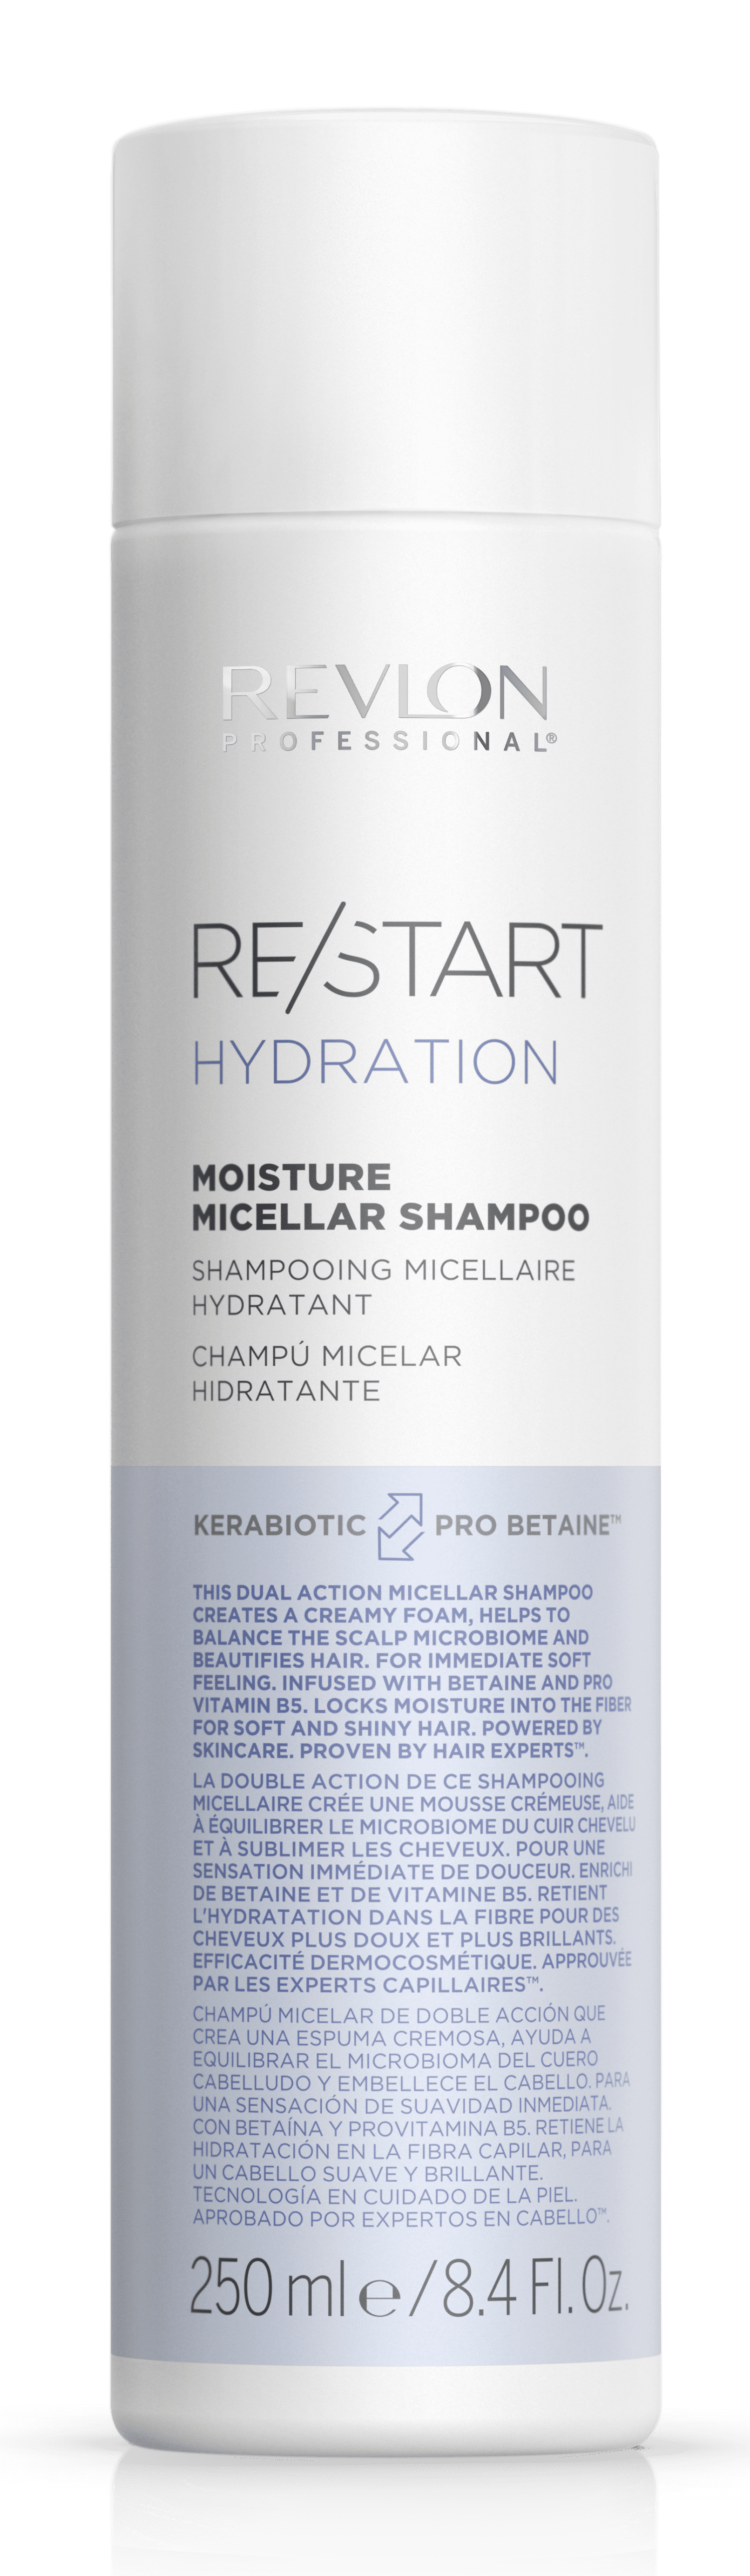 Revlon Restart - Champú Micelar HYDRATION para cabello seco 250 ml